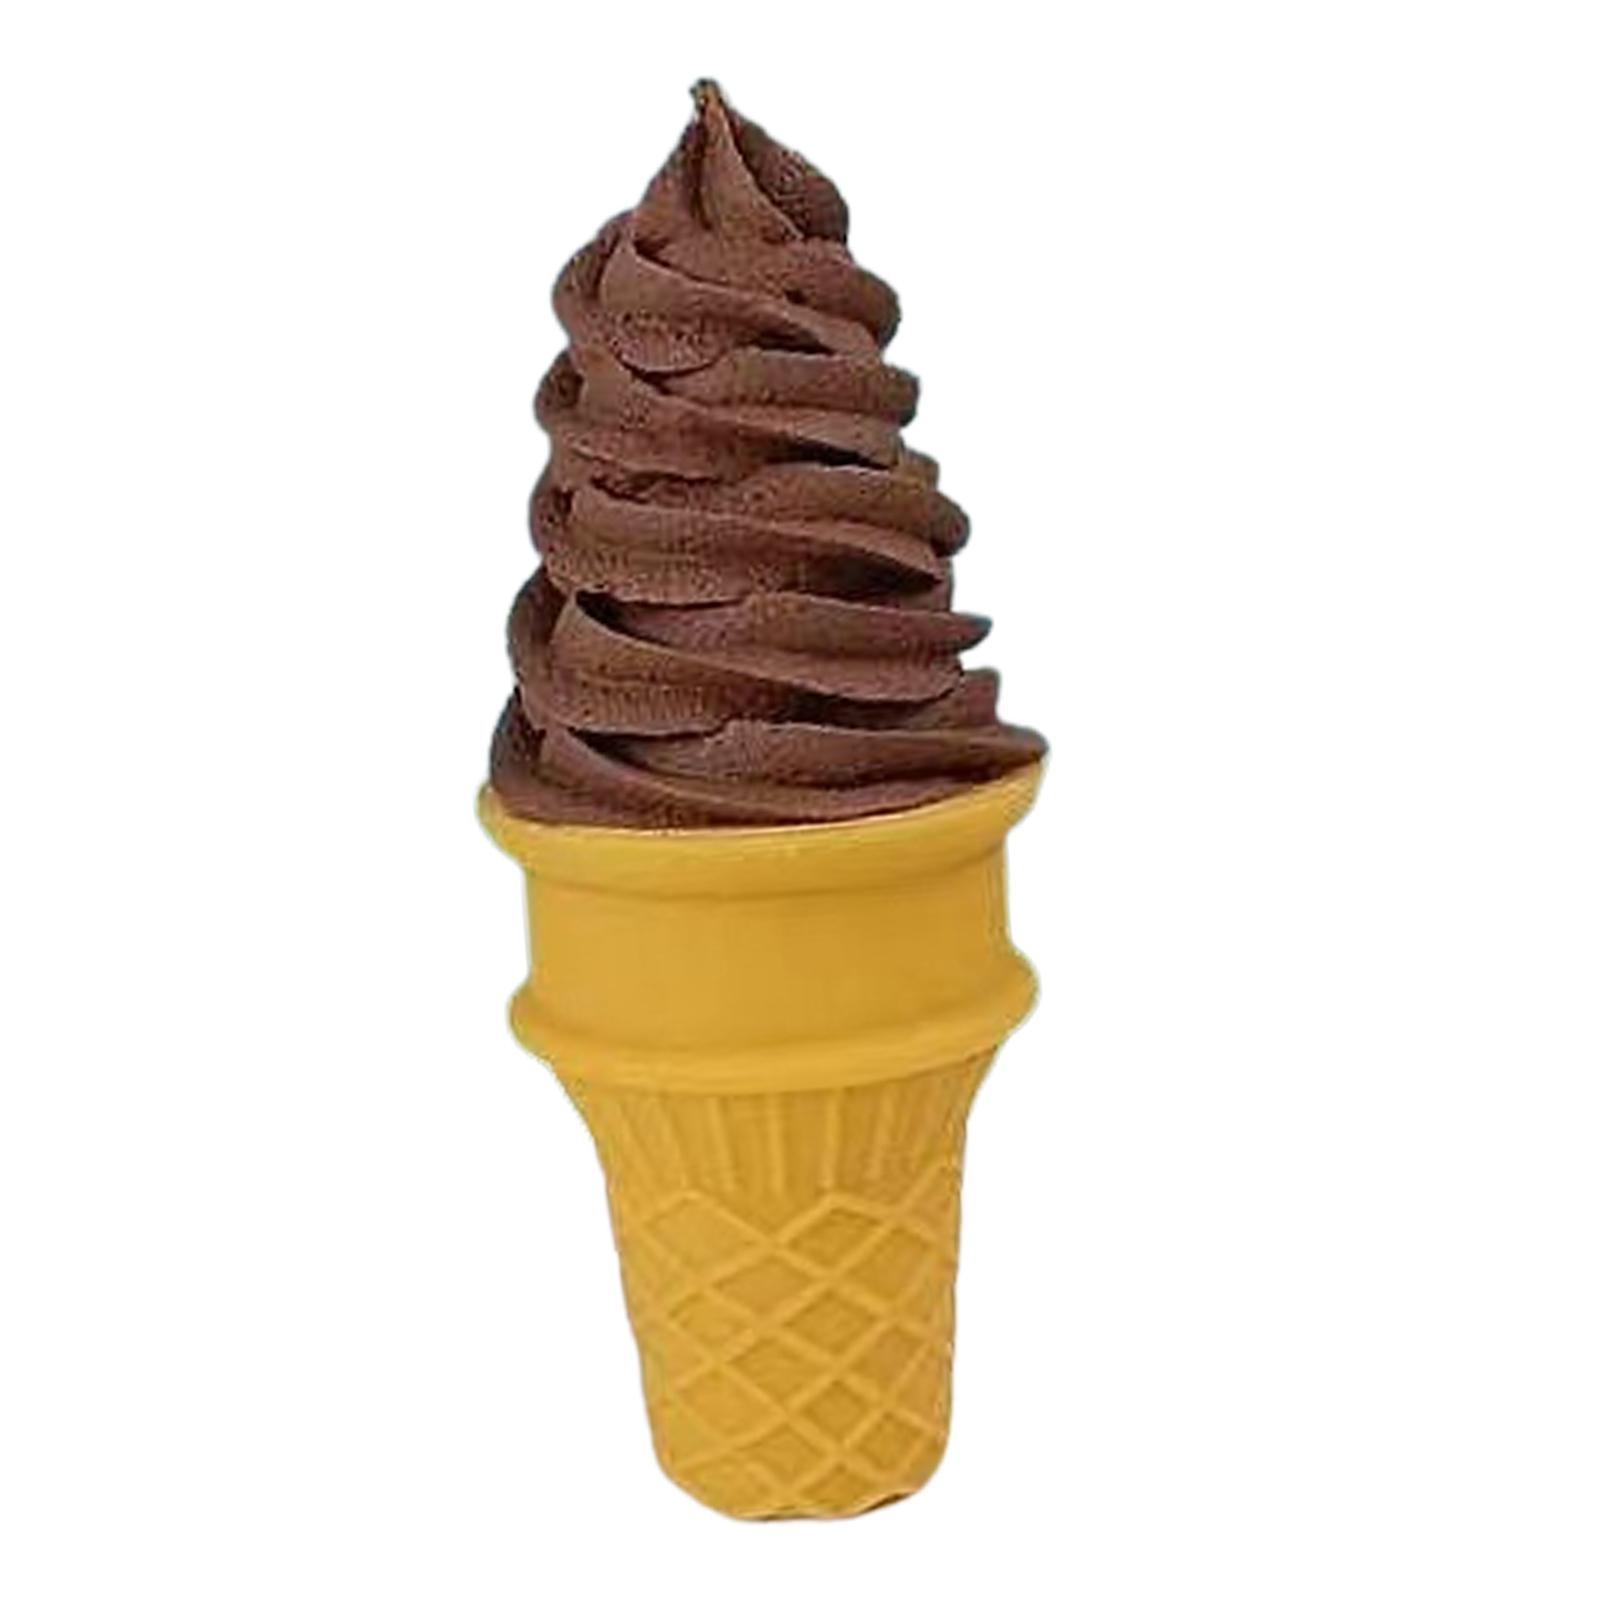 Fake Ice Cream Cone Food Model for Display Dessert Photo Props Desktop Decor Brown